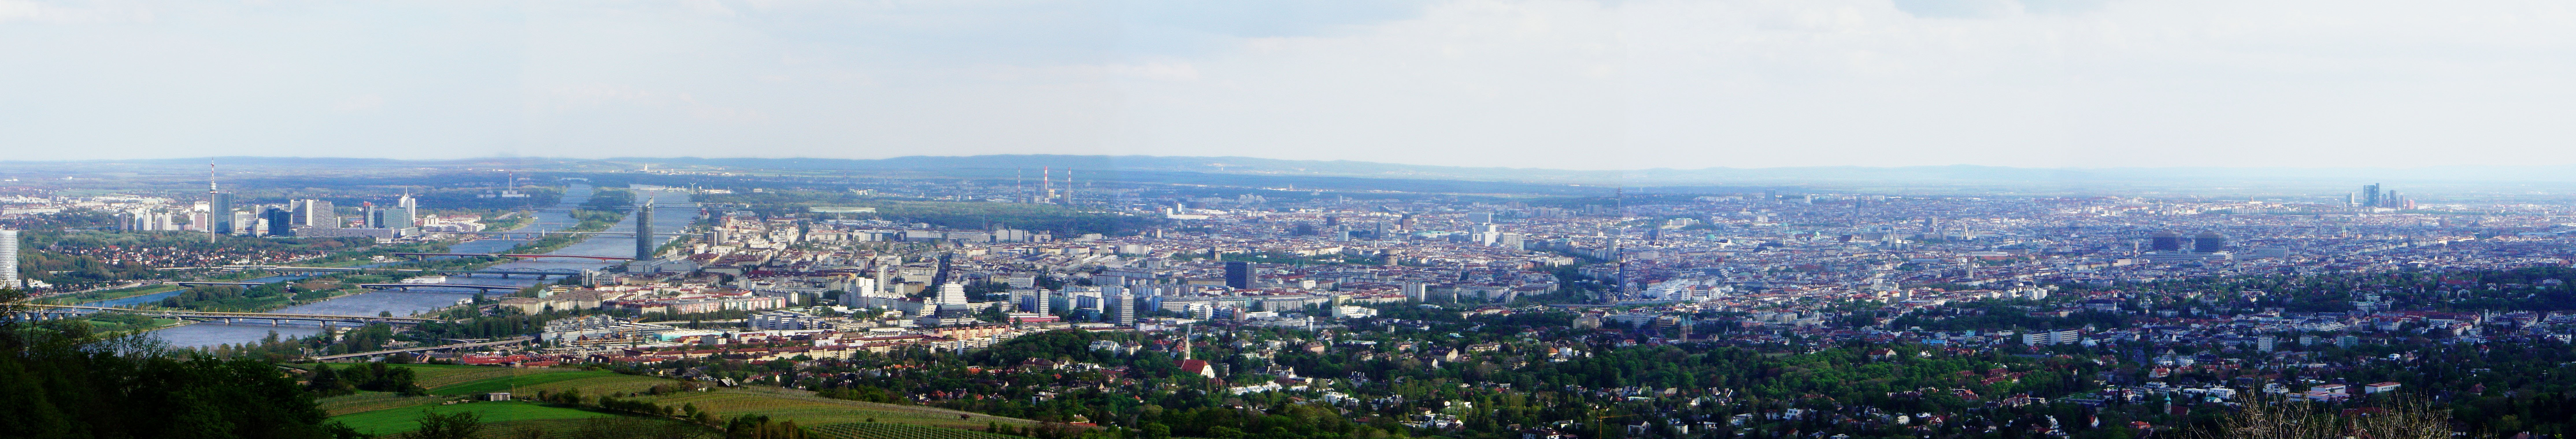 Vienna panorama photo